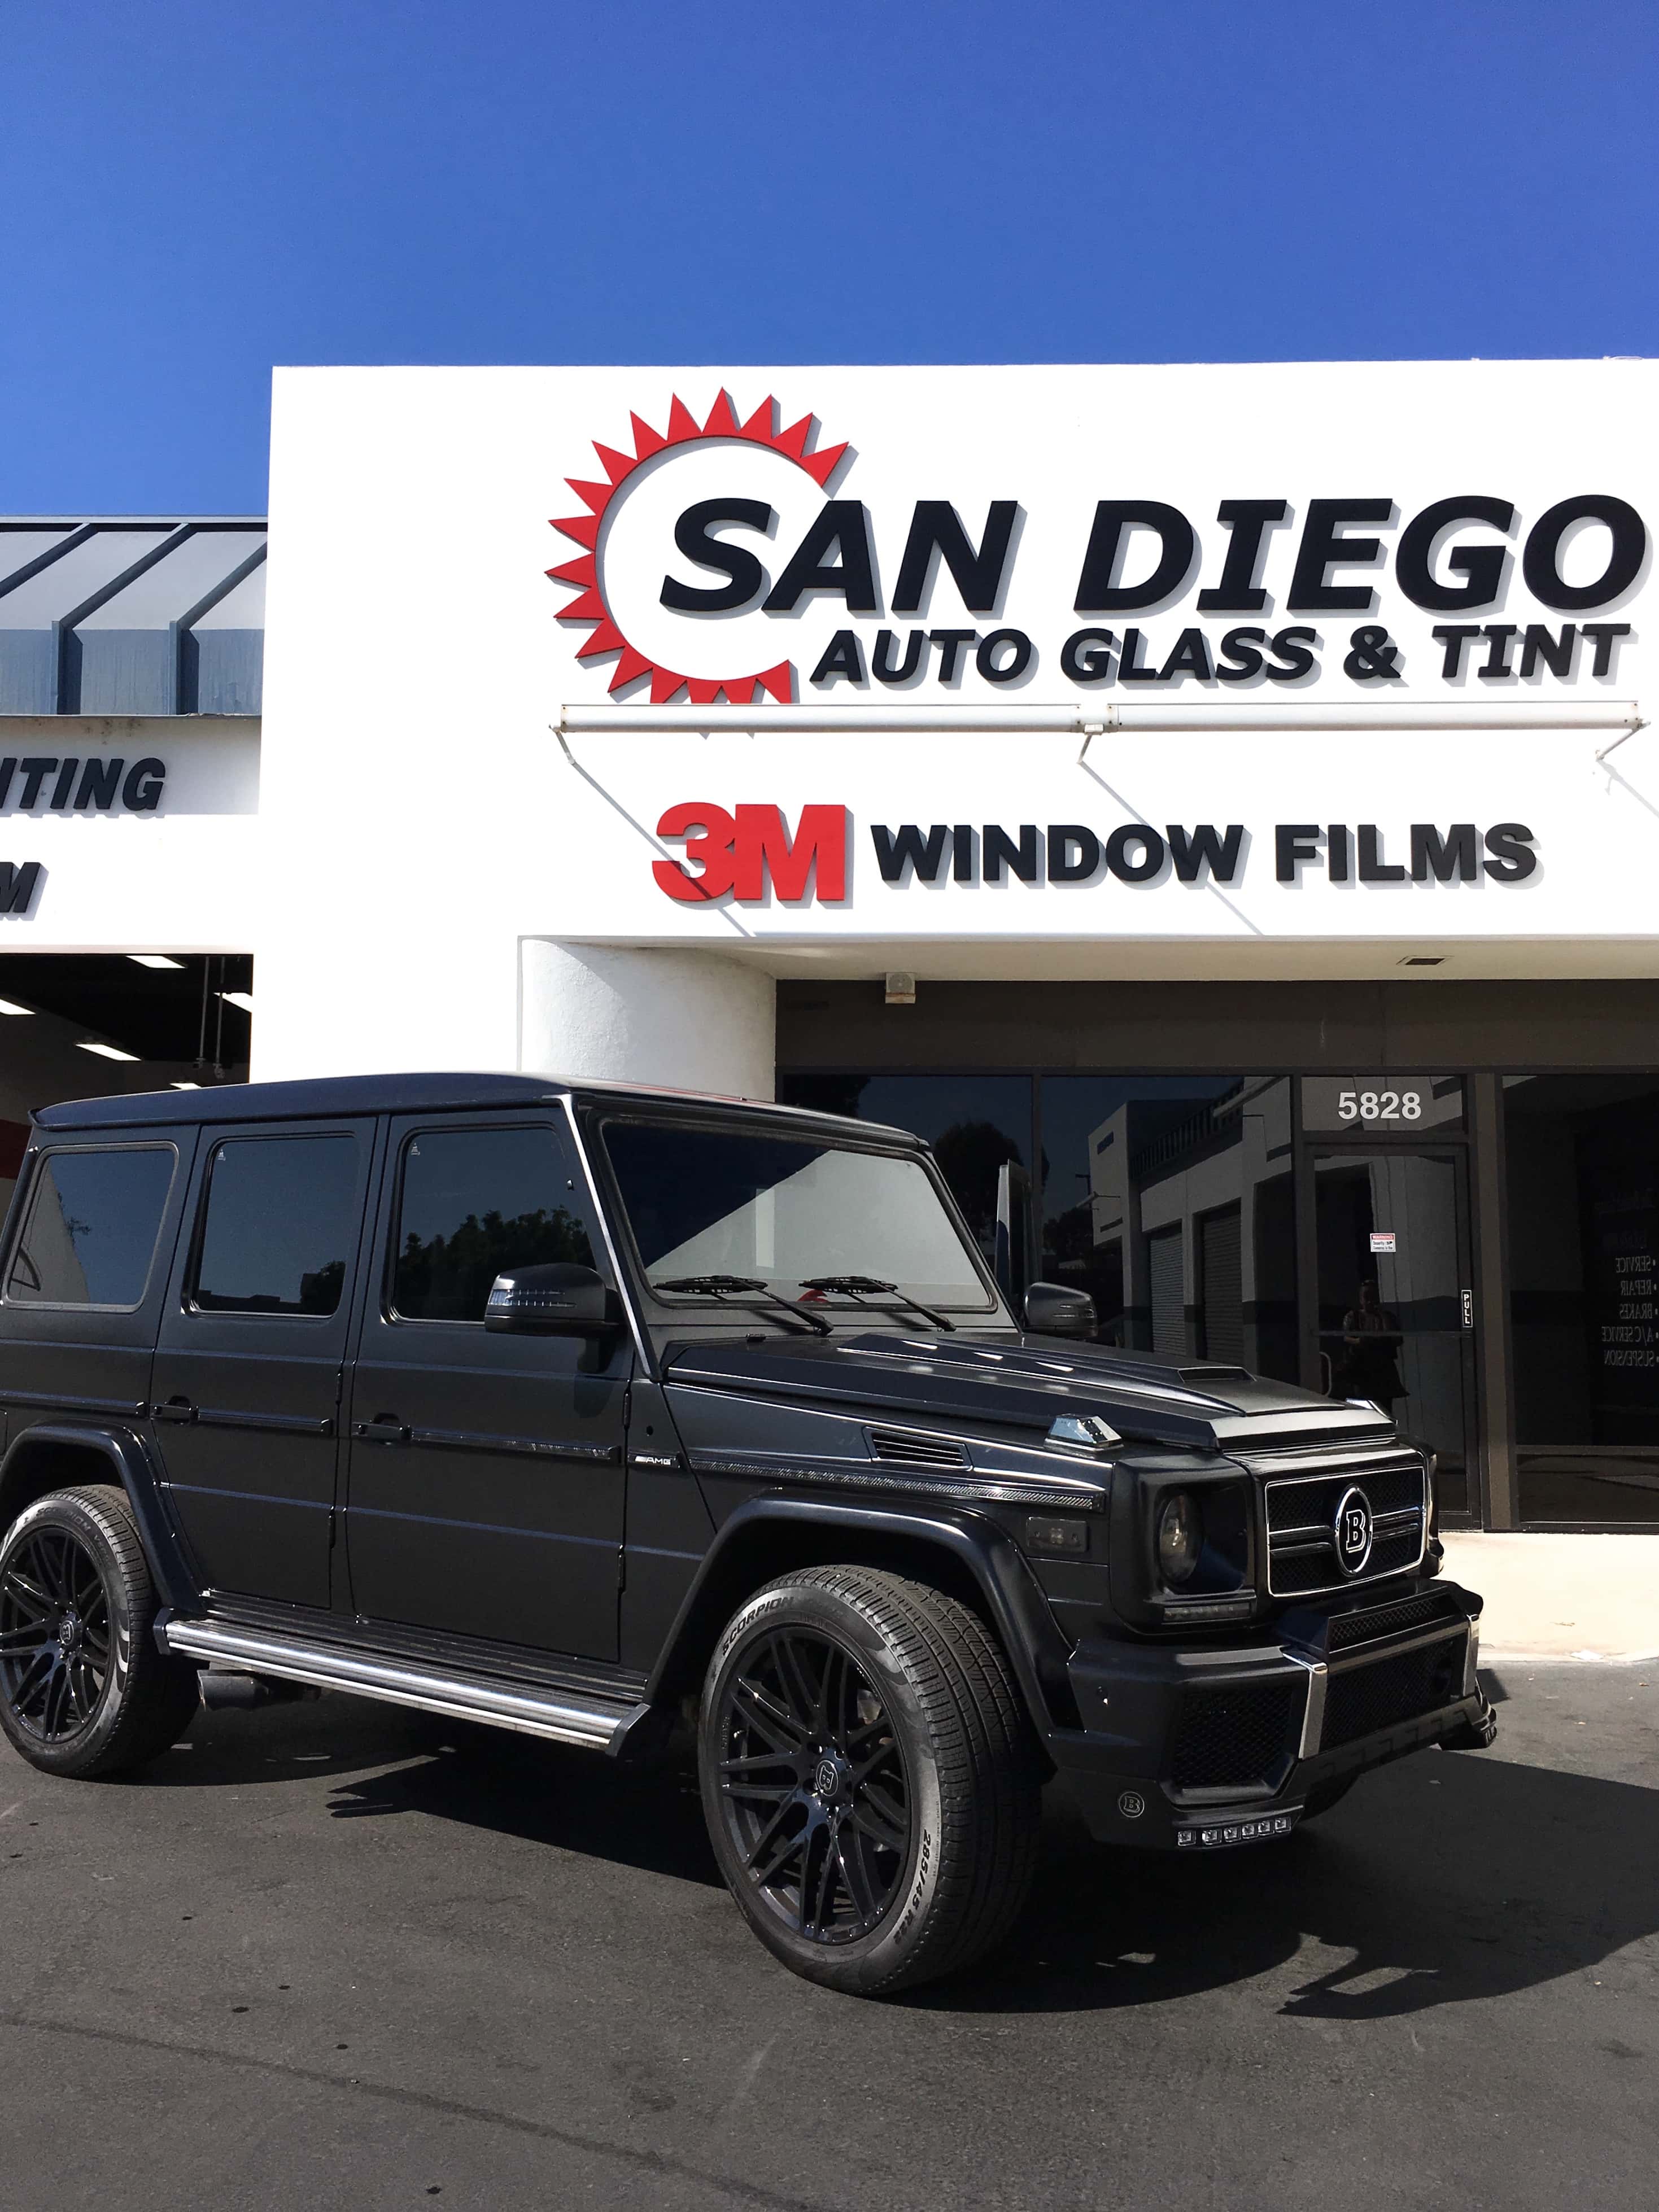 San Diego Auto Glass & Tint, US, tint san diego